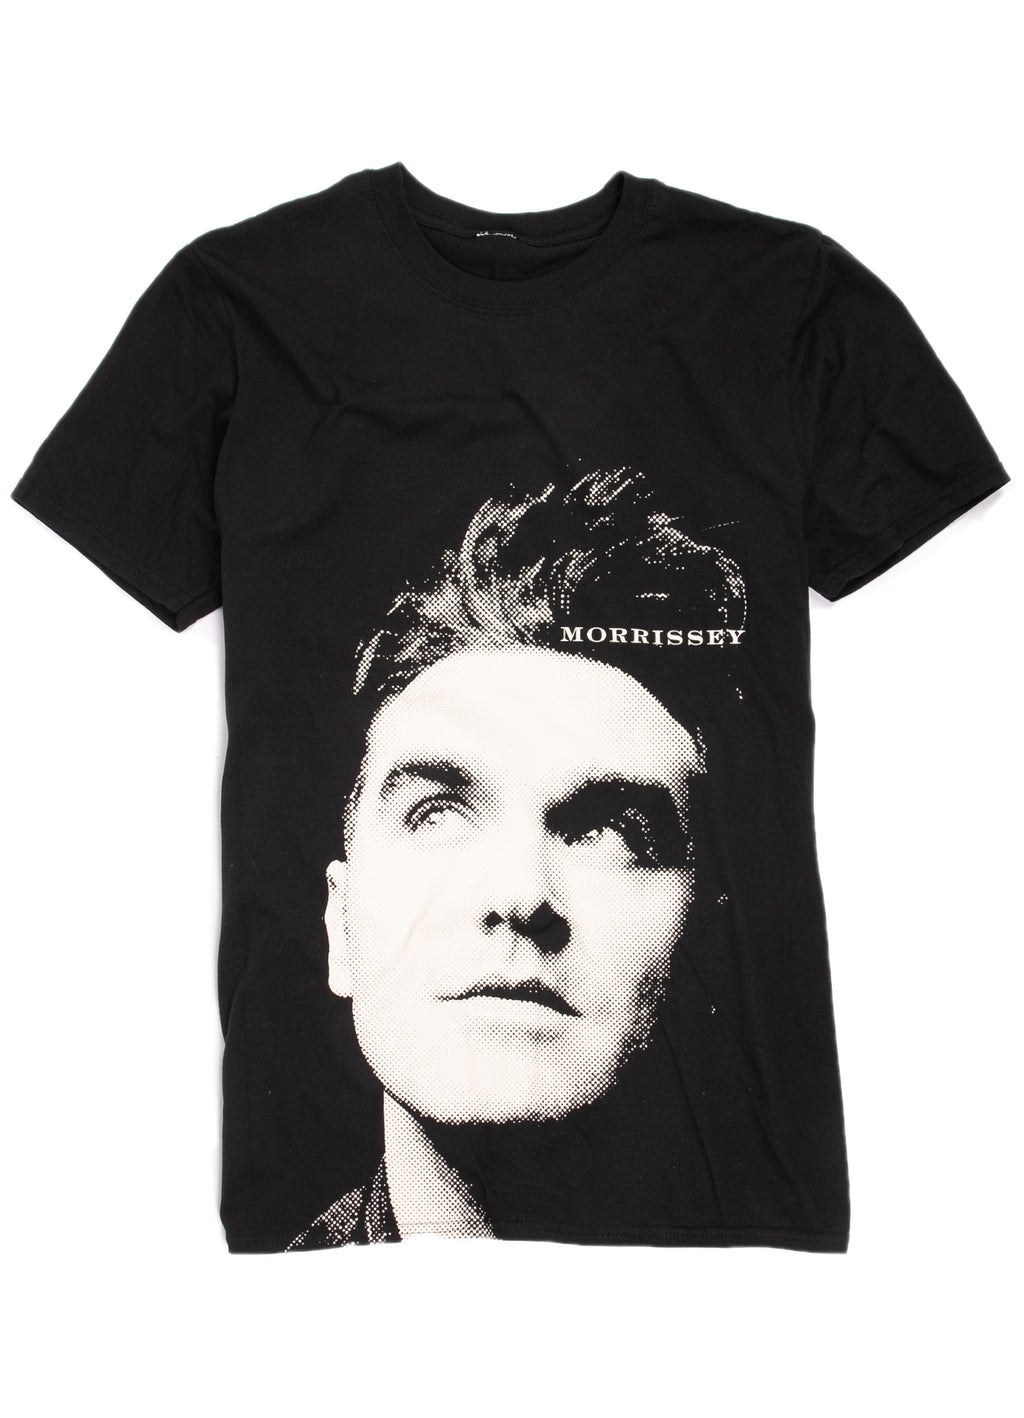 Morrissey everyday photo t-shirt.